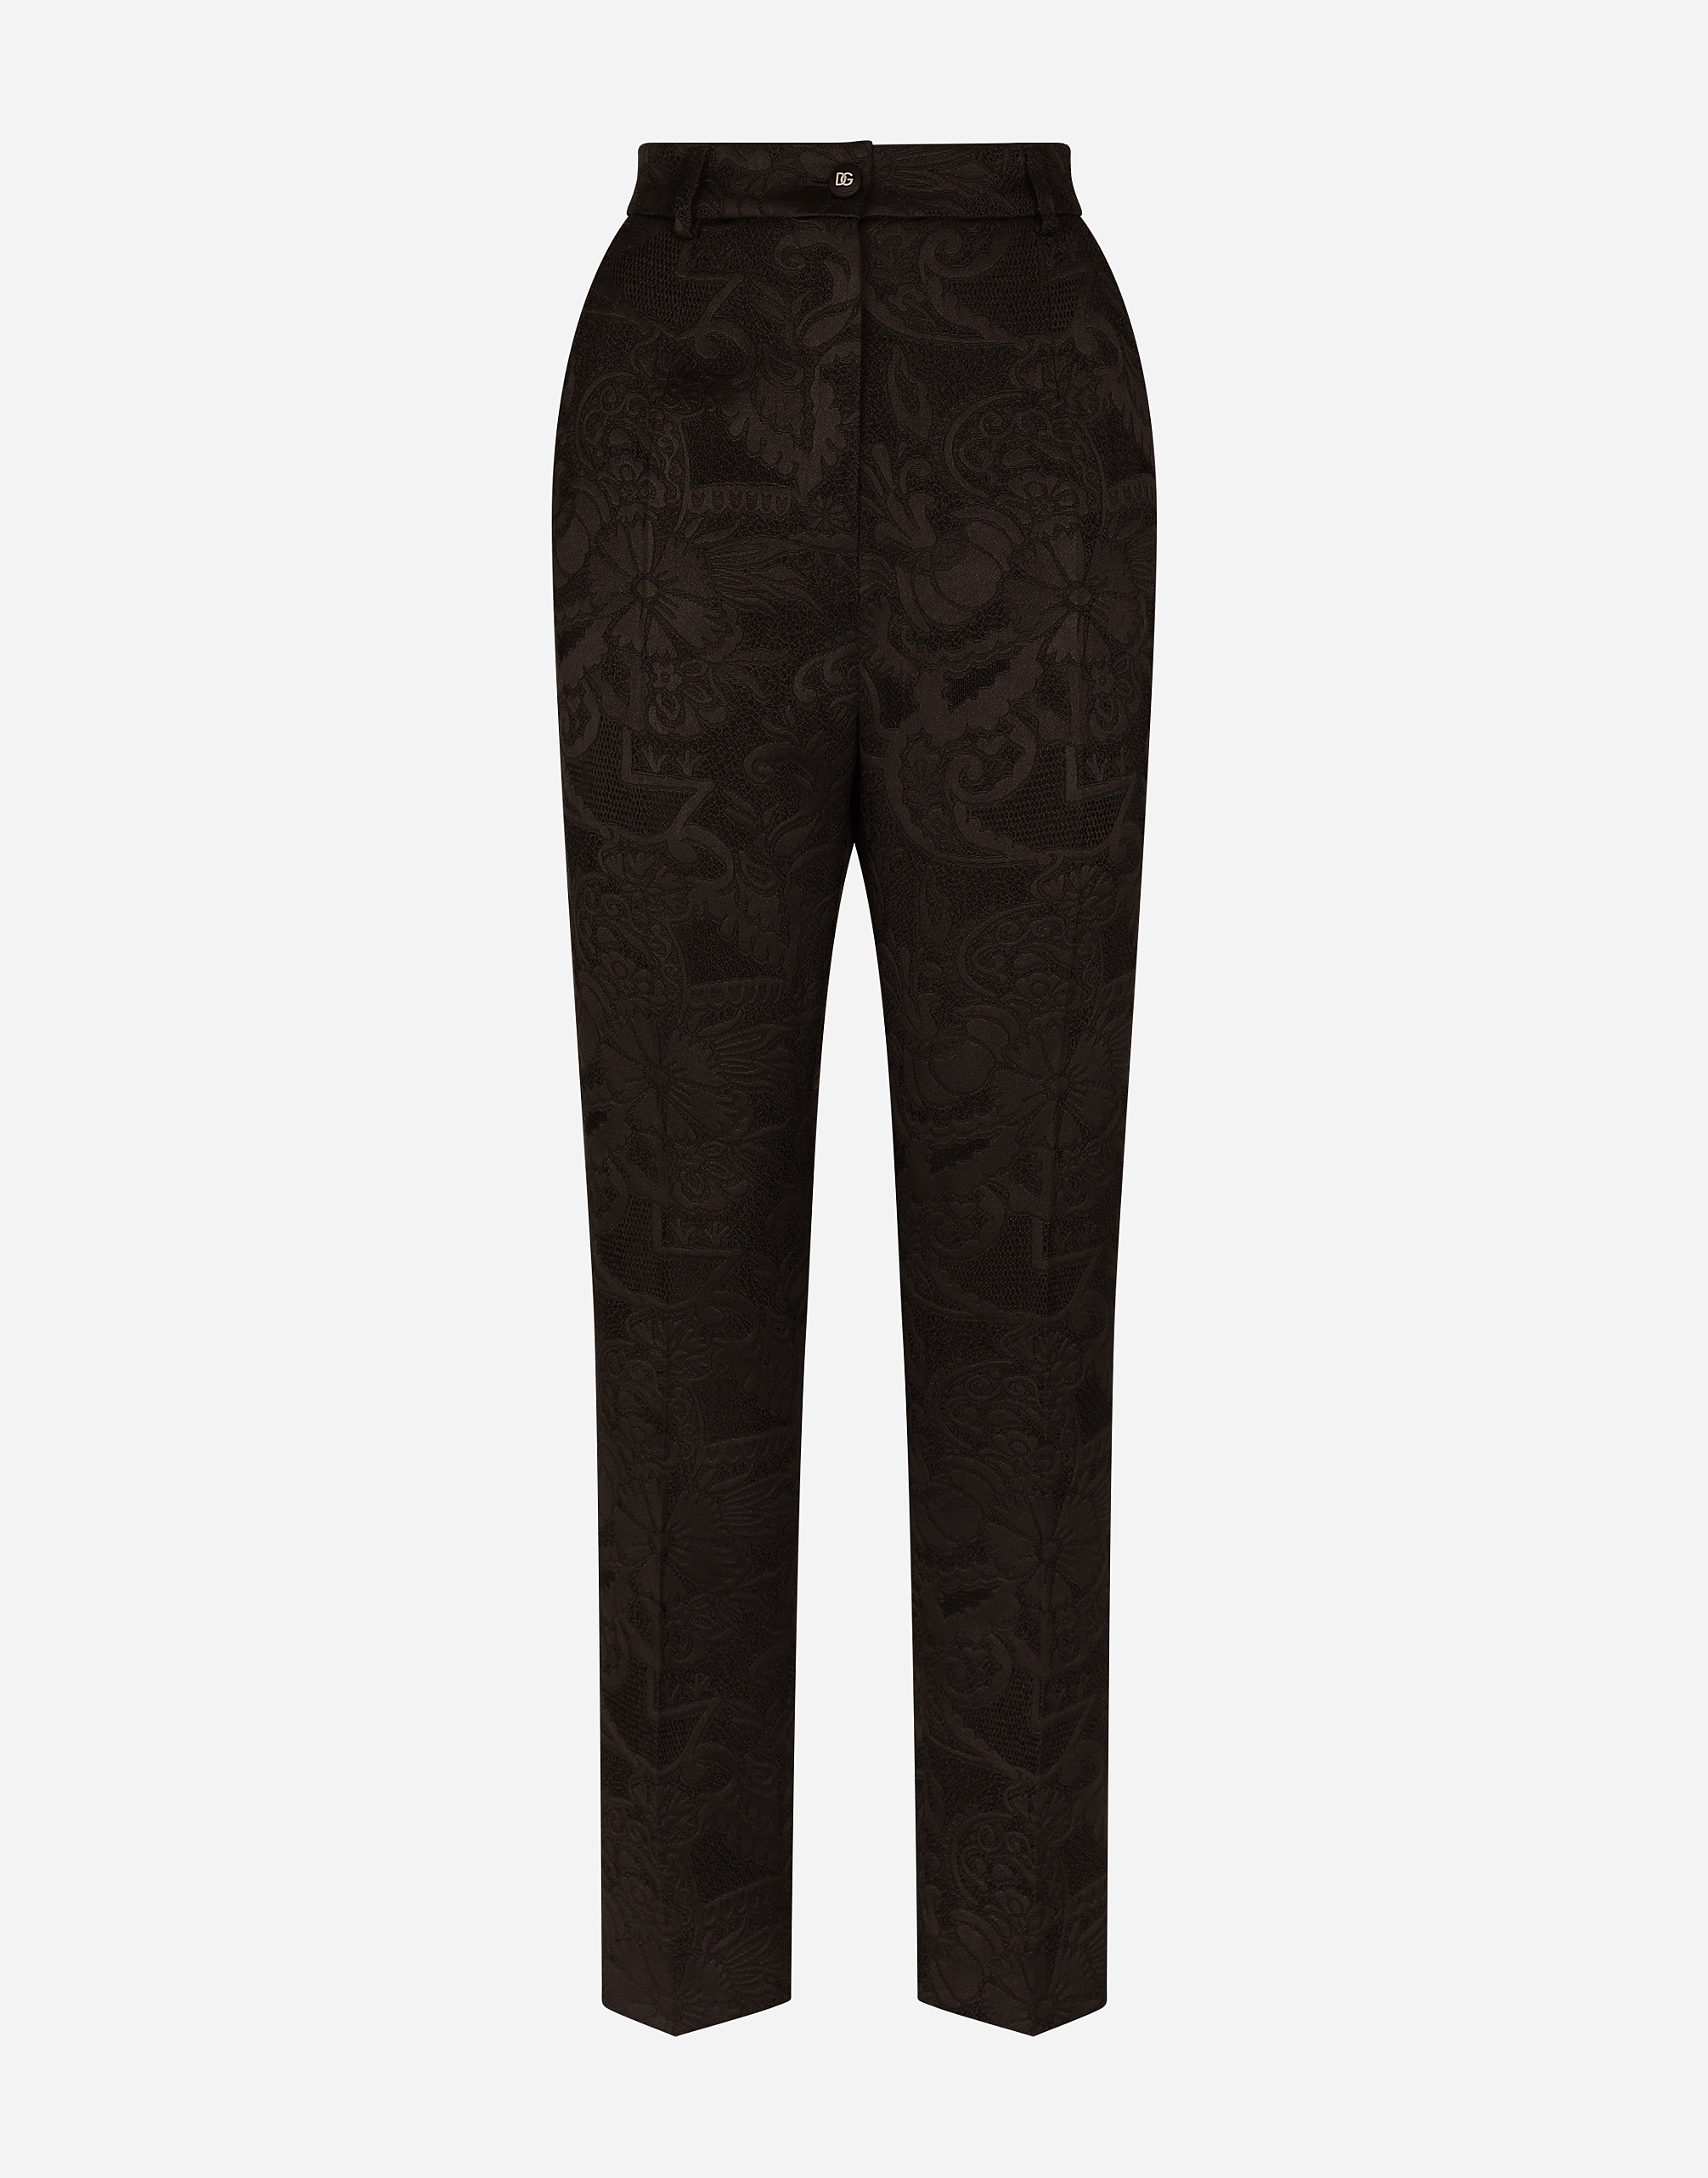 Dolce & Gabbana Floral Jacquard Pants In Black